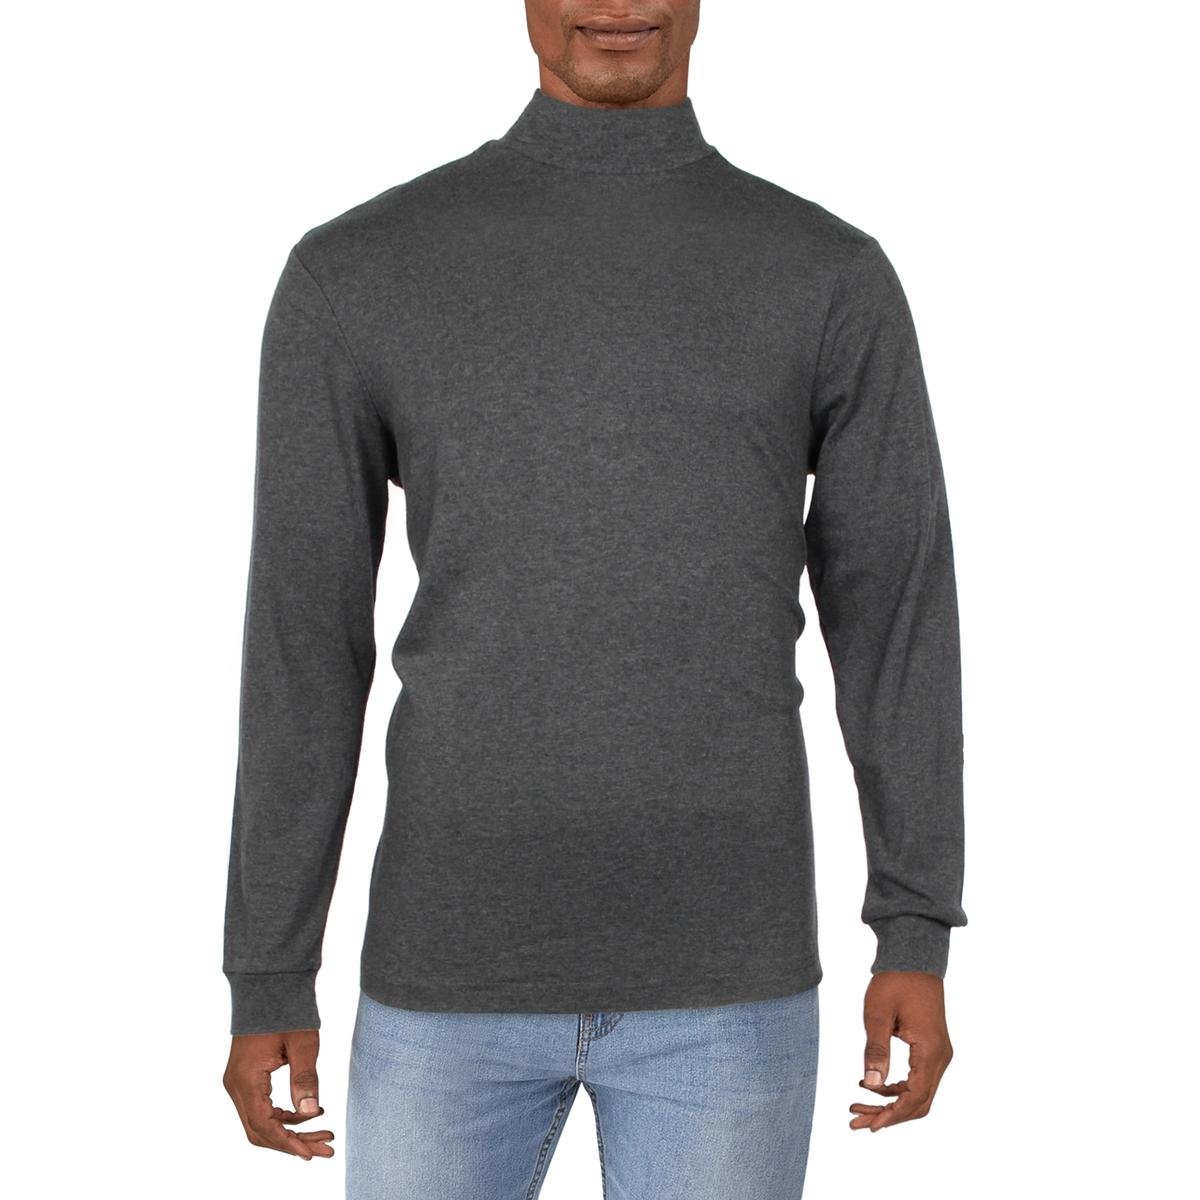 Club Room Mens Cotton Mock Neck Pullover T-Shirt Top BHFO 3755 | eBay